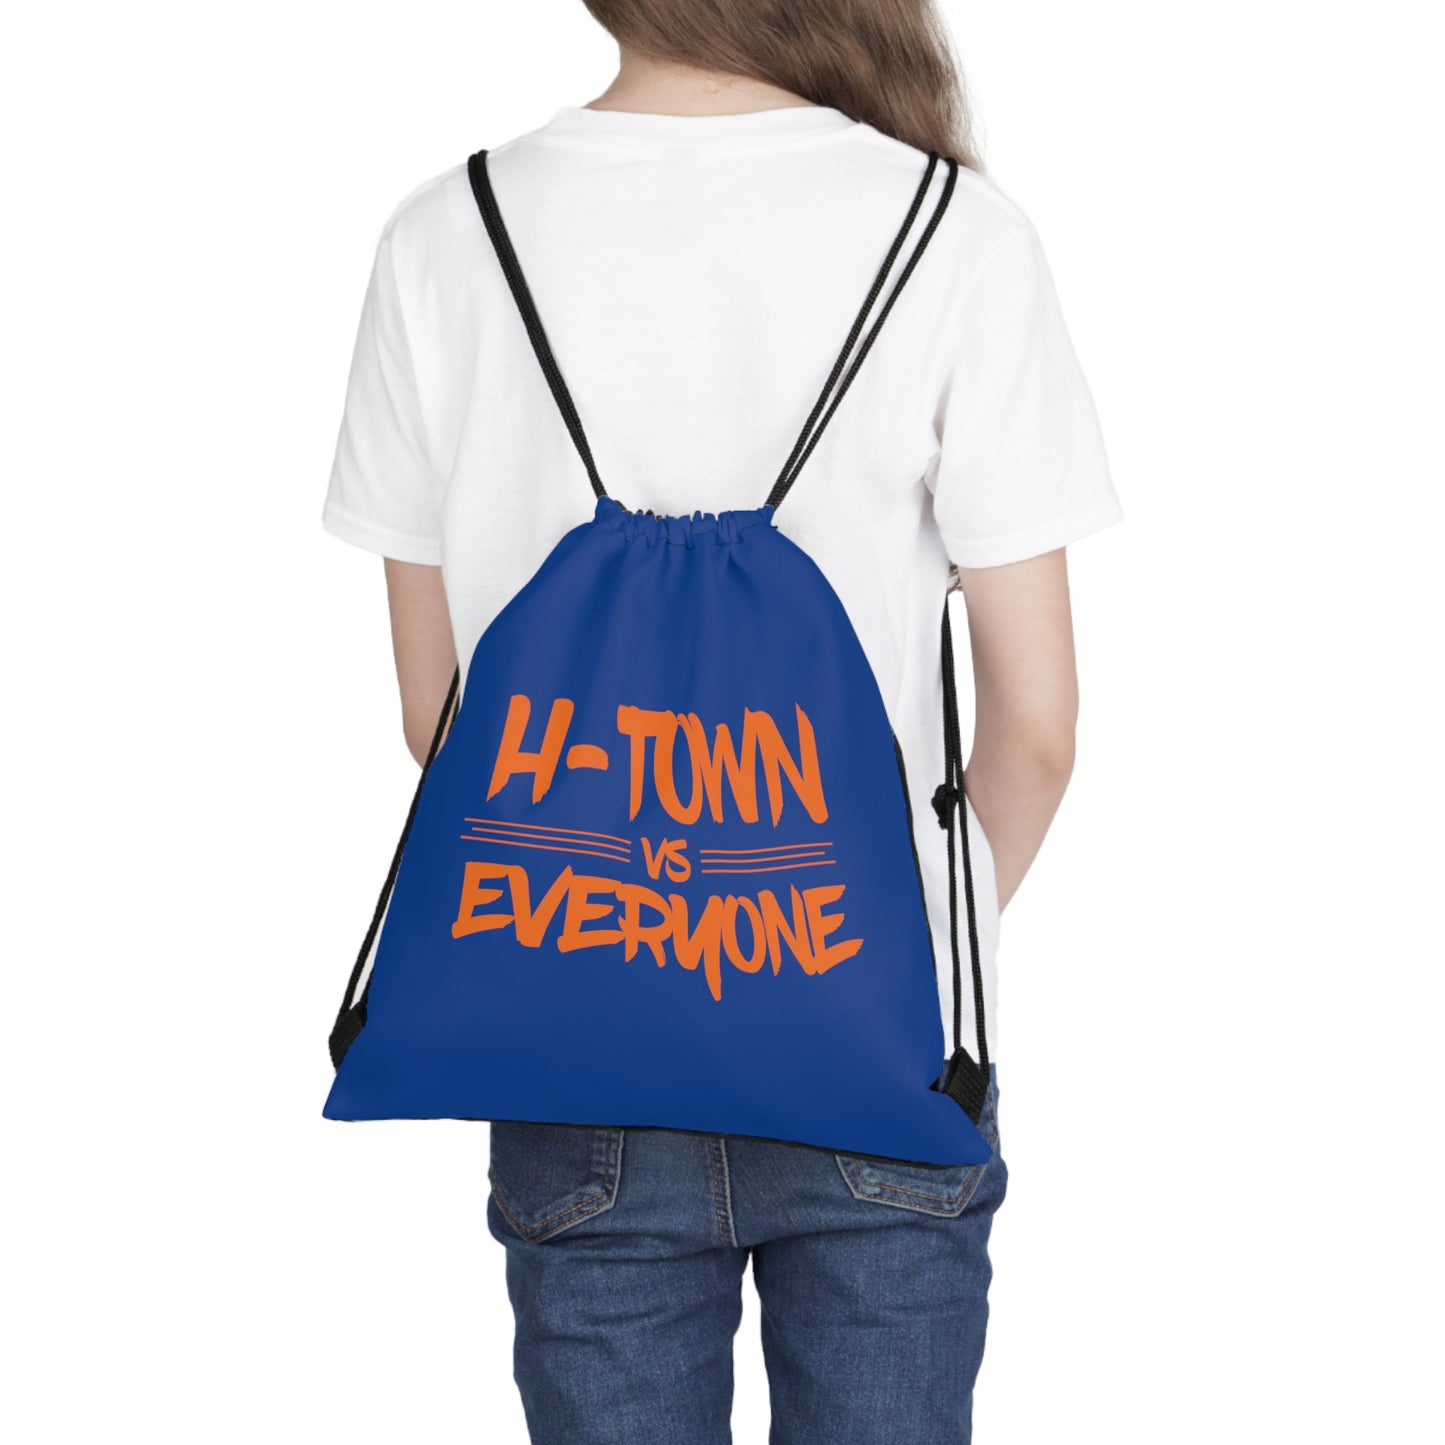 H-Town vs Everyone Drawstring Bag